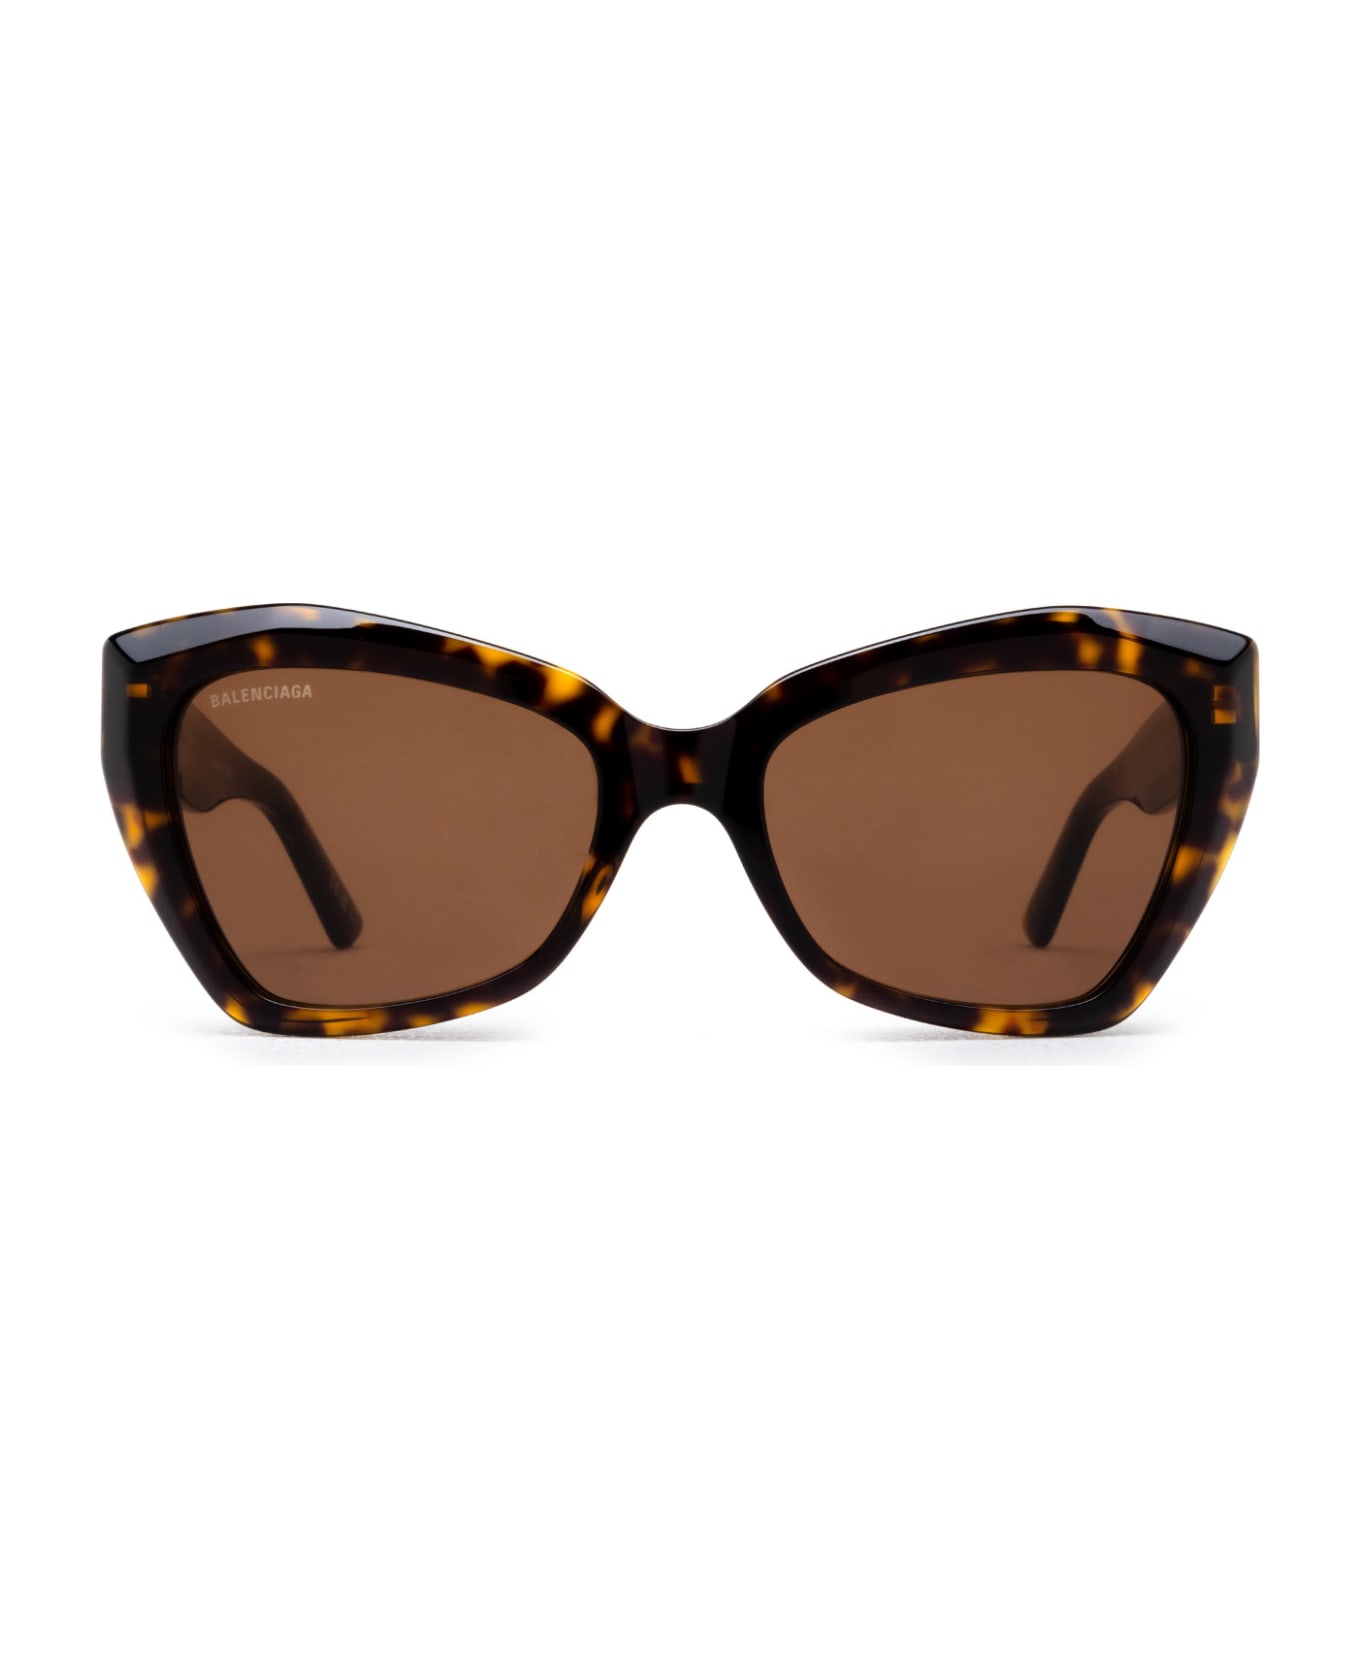 Balenciaga Eyewear Bb0271s Sunglasses - Havana サングラス